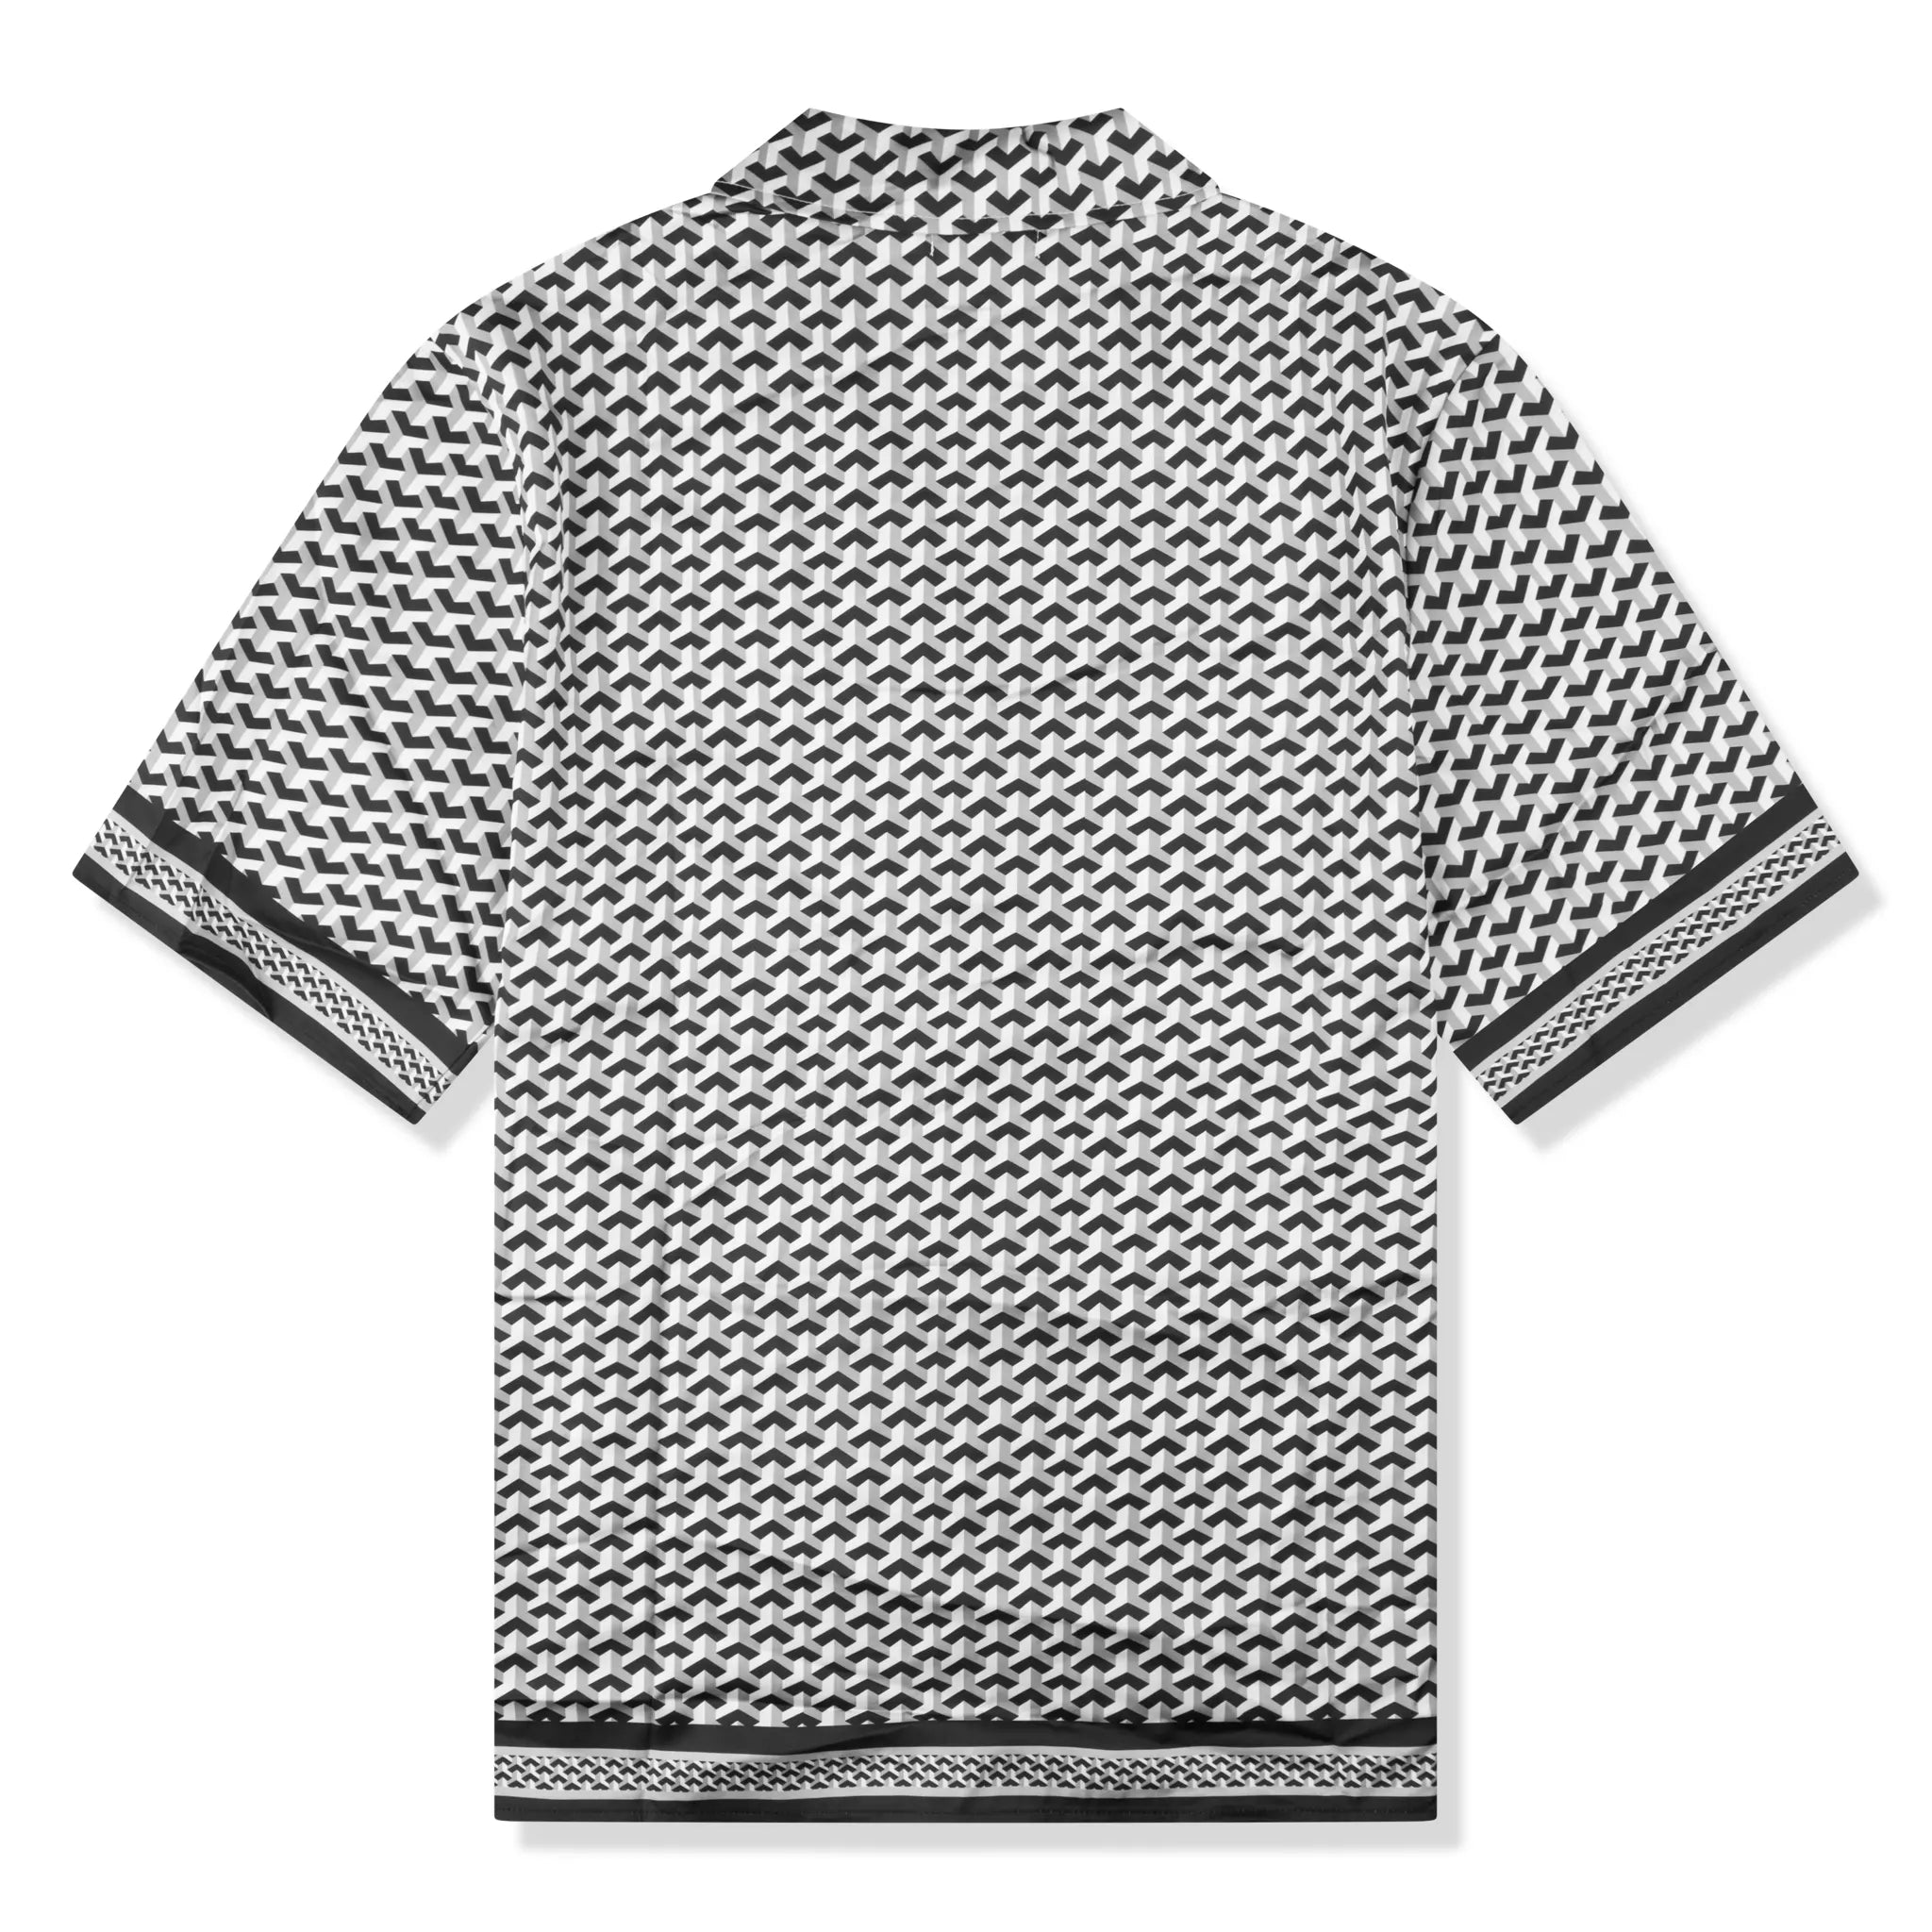 Back view of Belier Illusion Print Contrast Panel Monochrome Resort Shirt BM-181